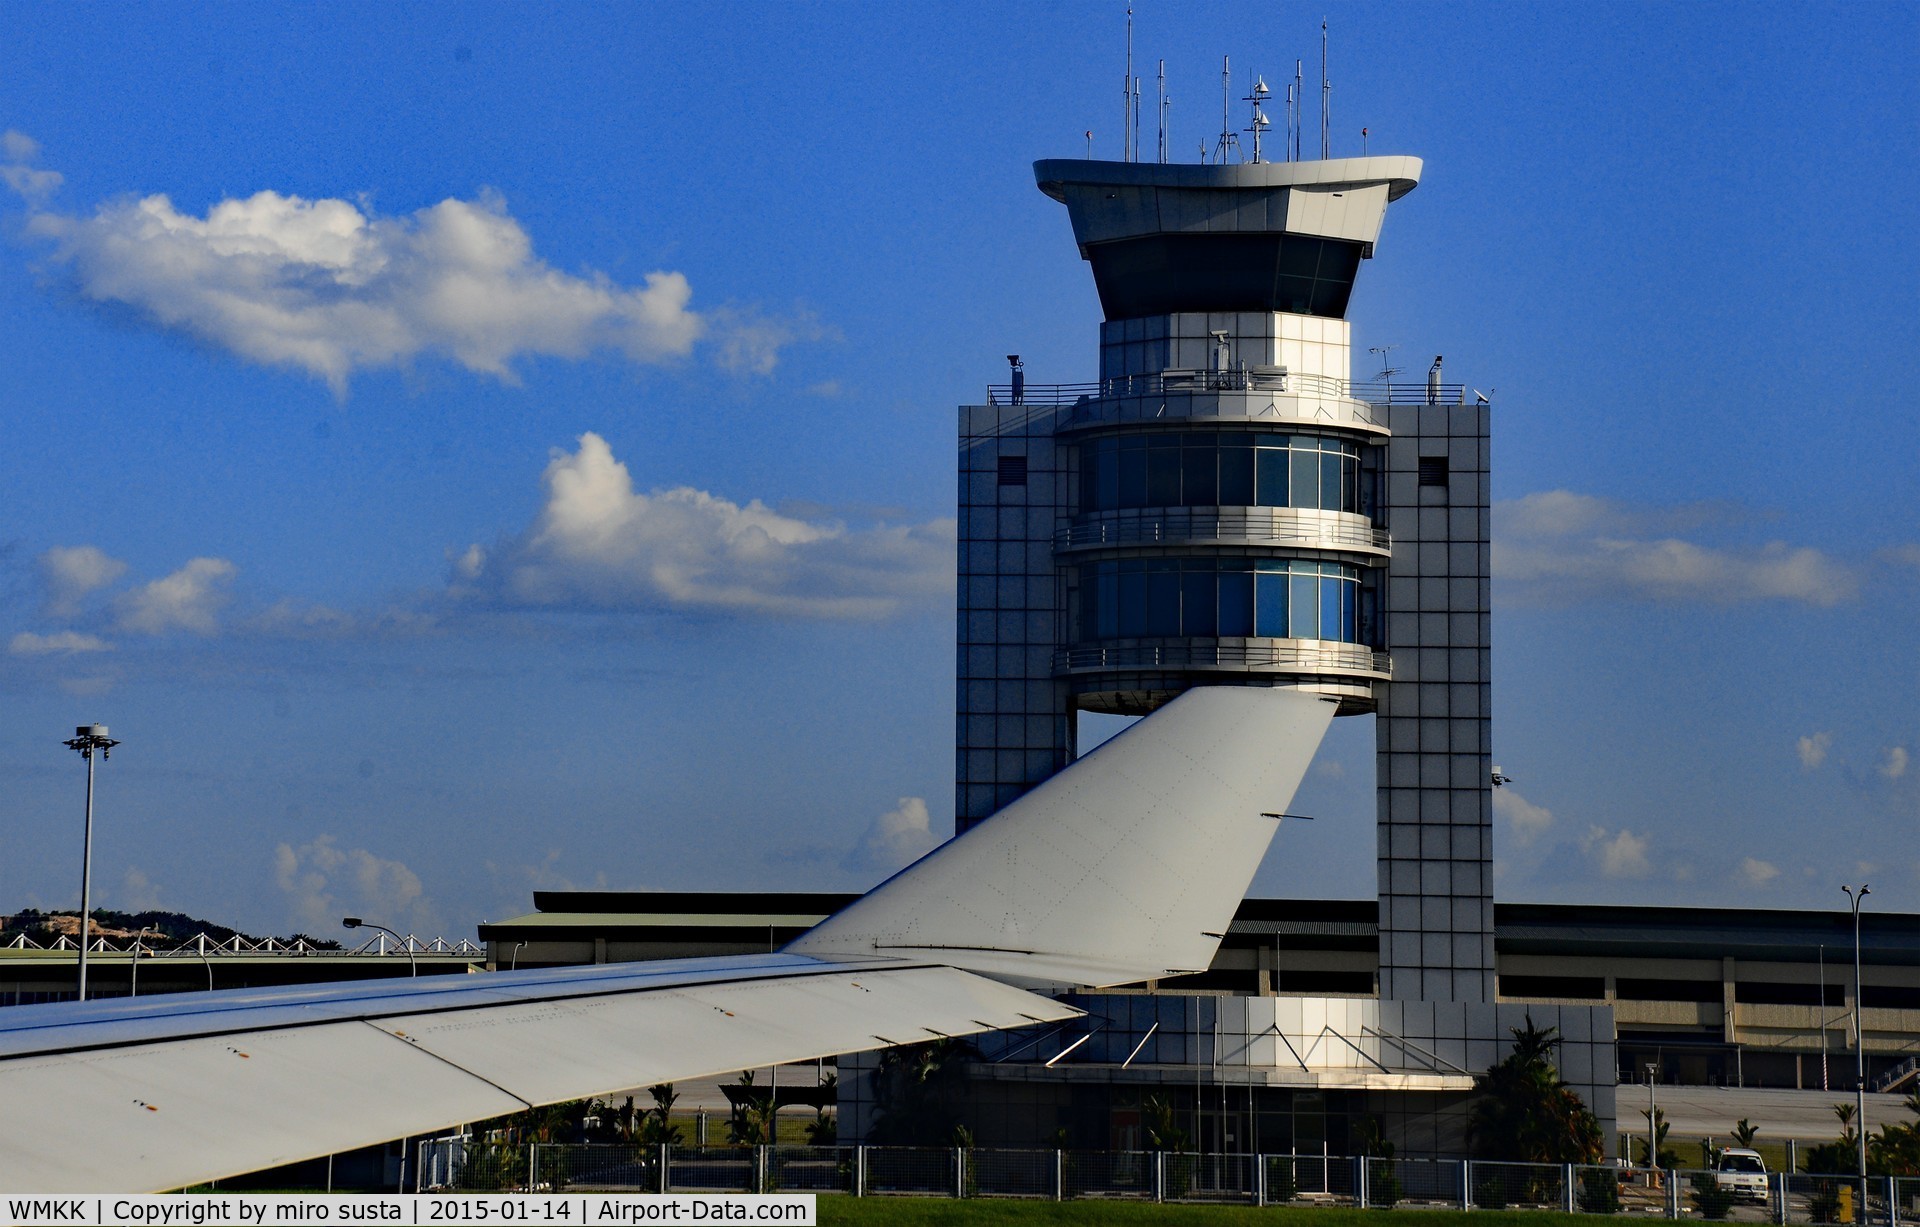 Kuala Lumpur International Airport, Sepang, Selangor Malaysia (WMKK) - Kuala Lumpur International Airport (KLIA).